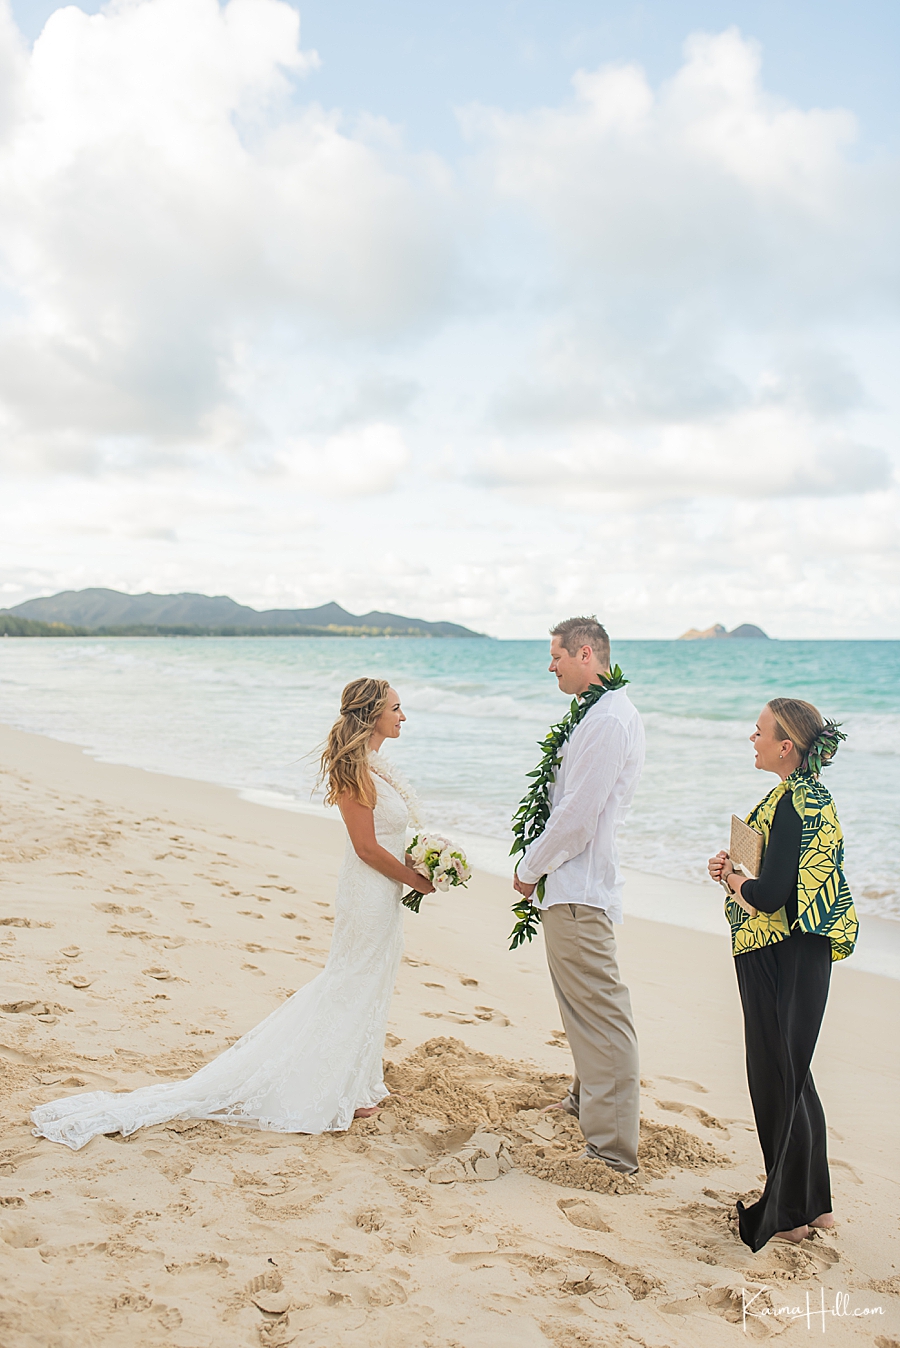 Beach wedding planning in Oahu
